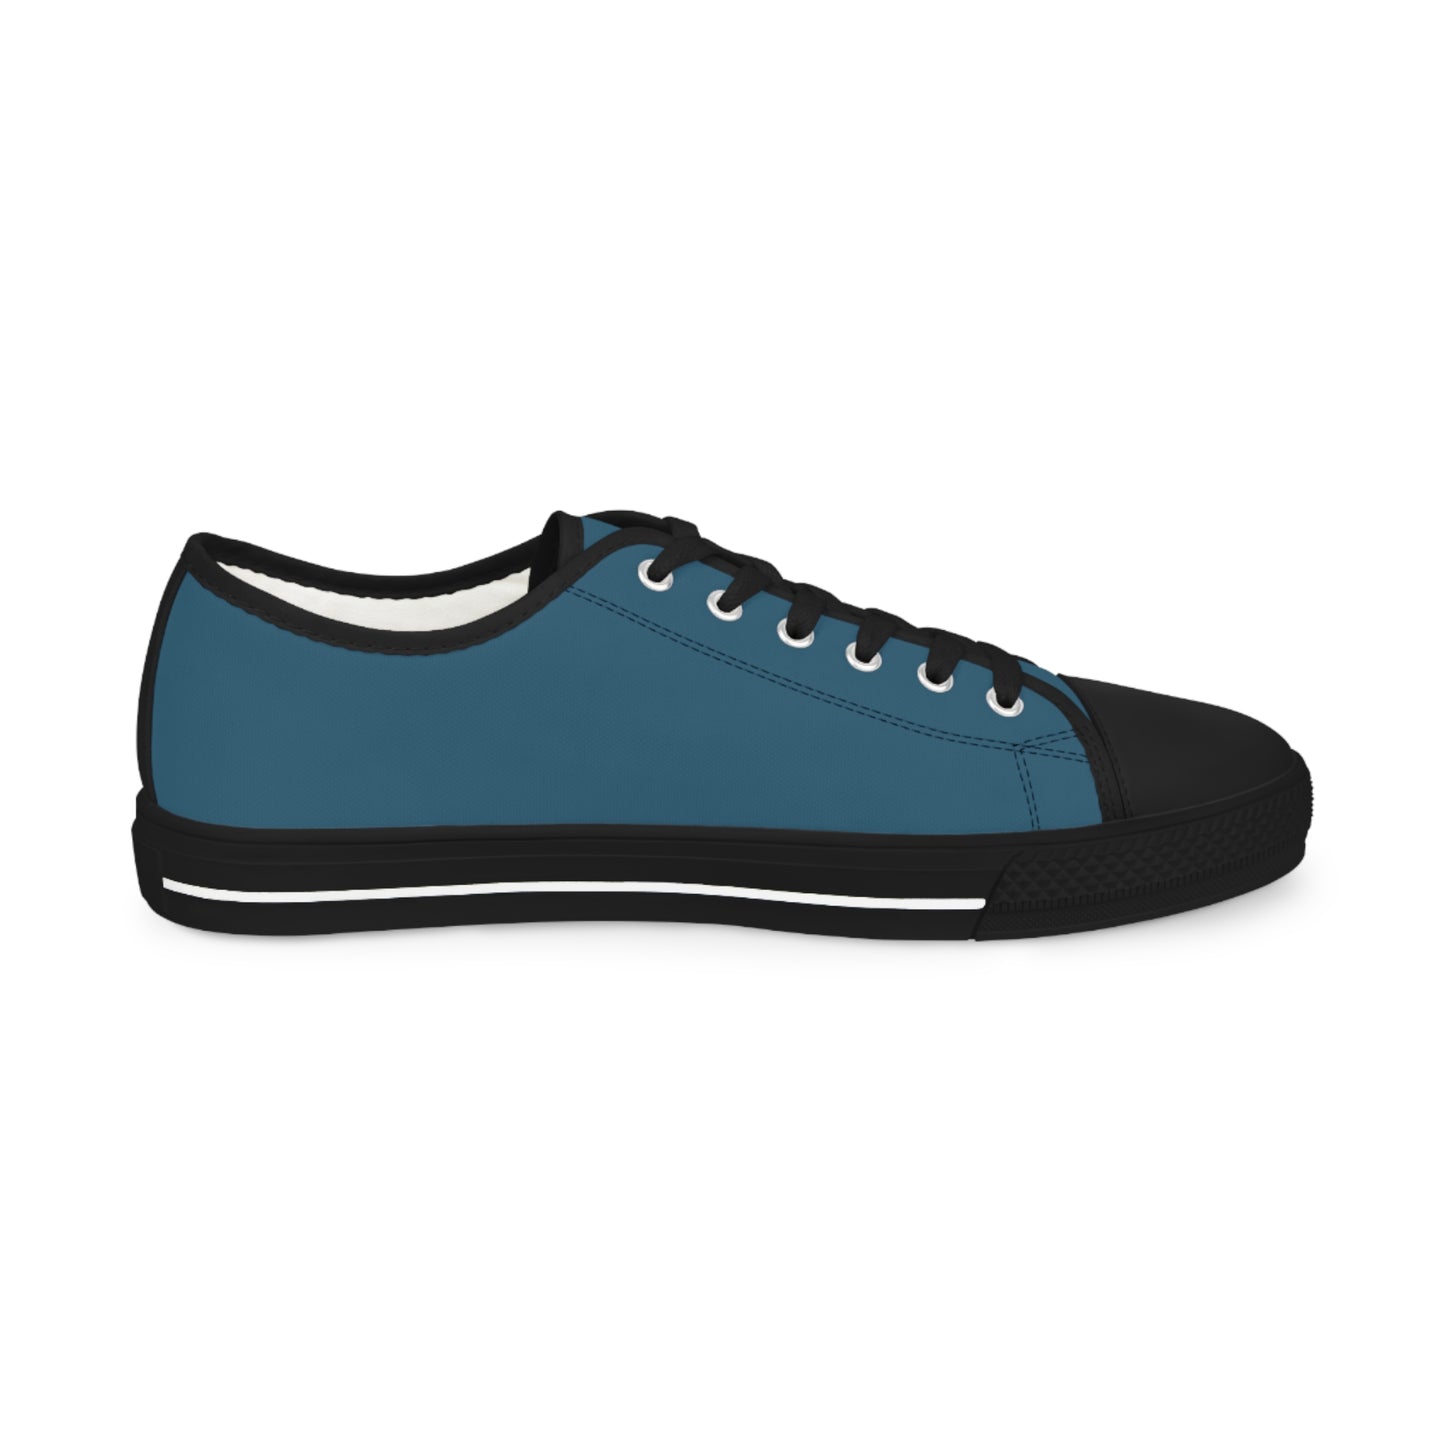 Men's Low Top Sneakers - Dark Blue US 14 Black sole